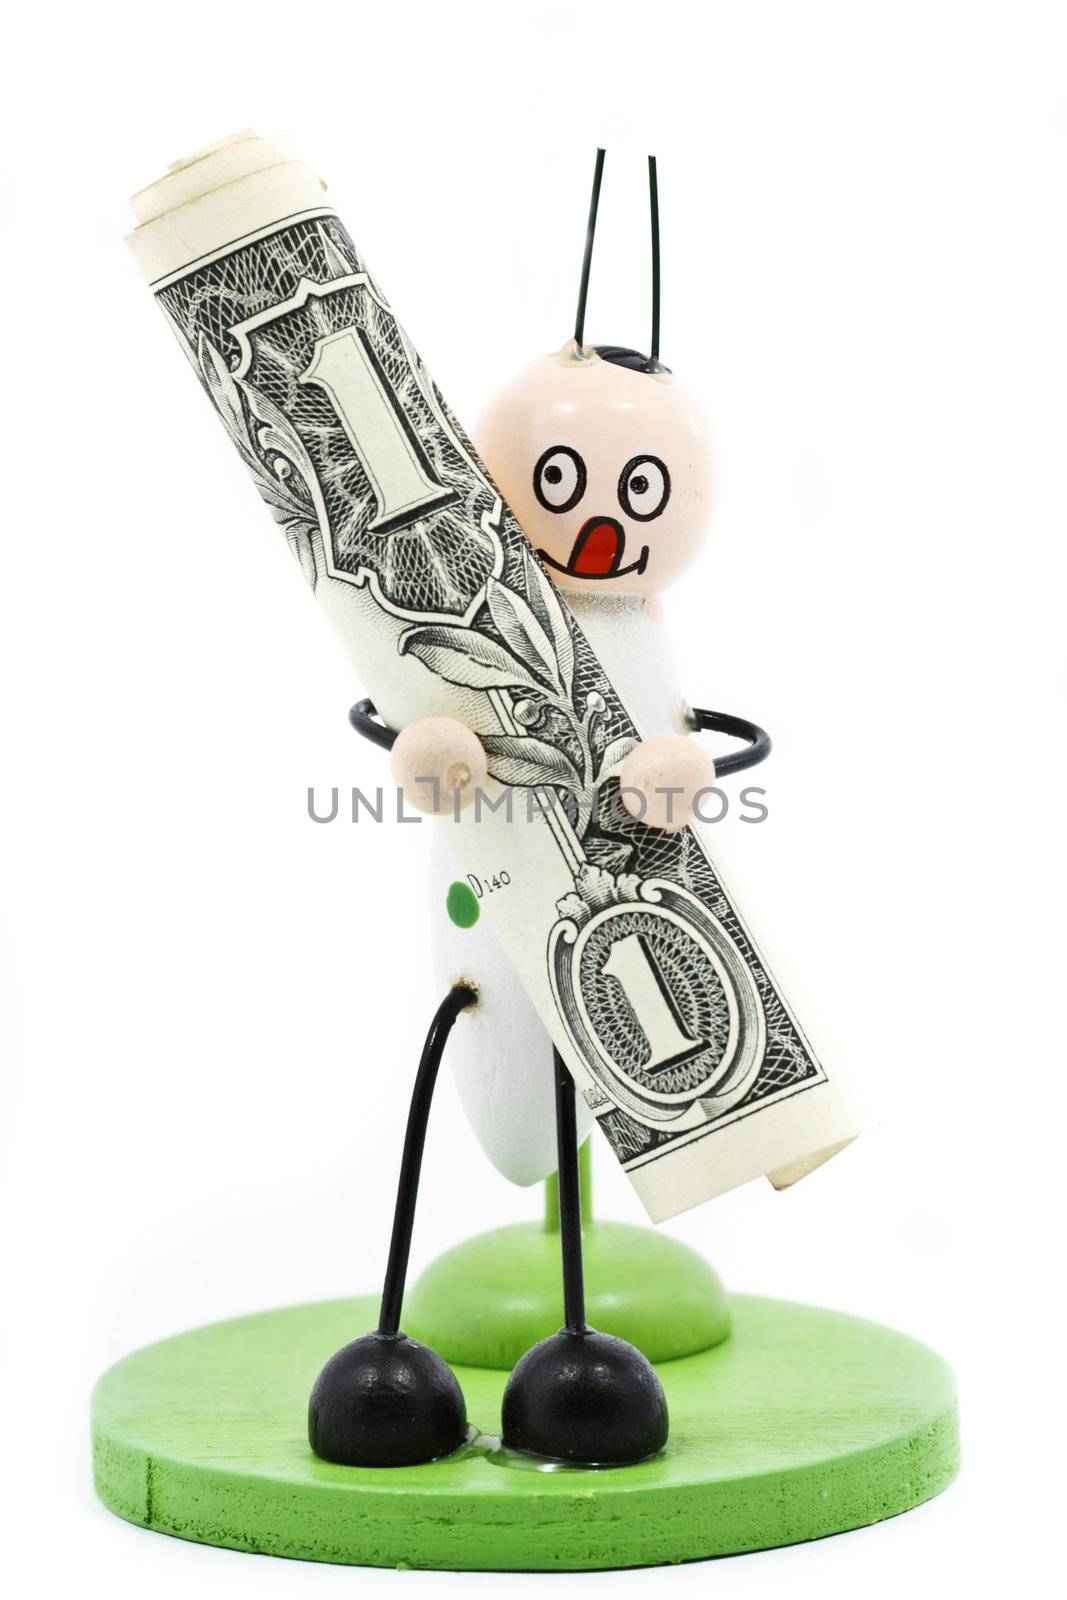 Children Toy Saving money, isolated object on white background